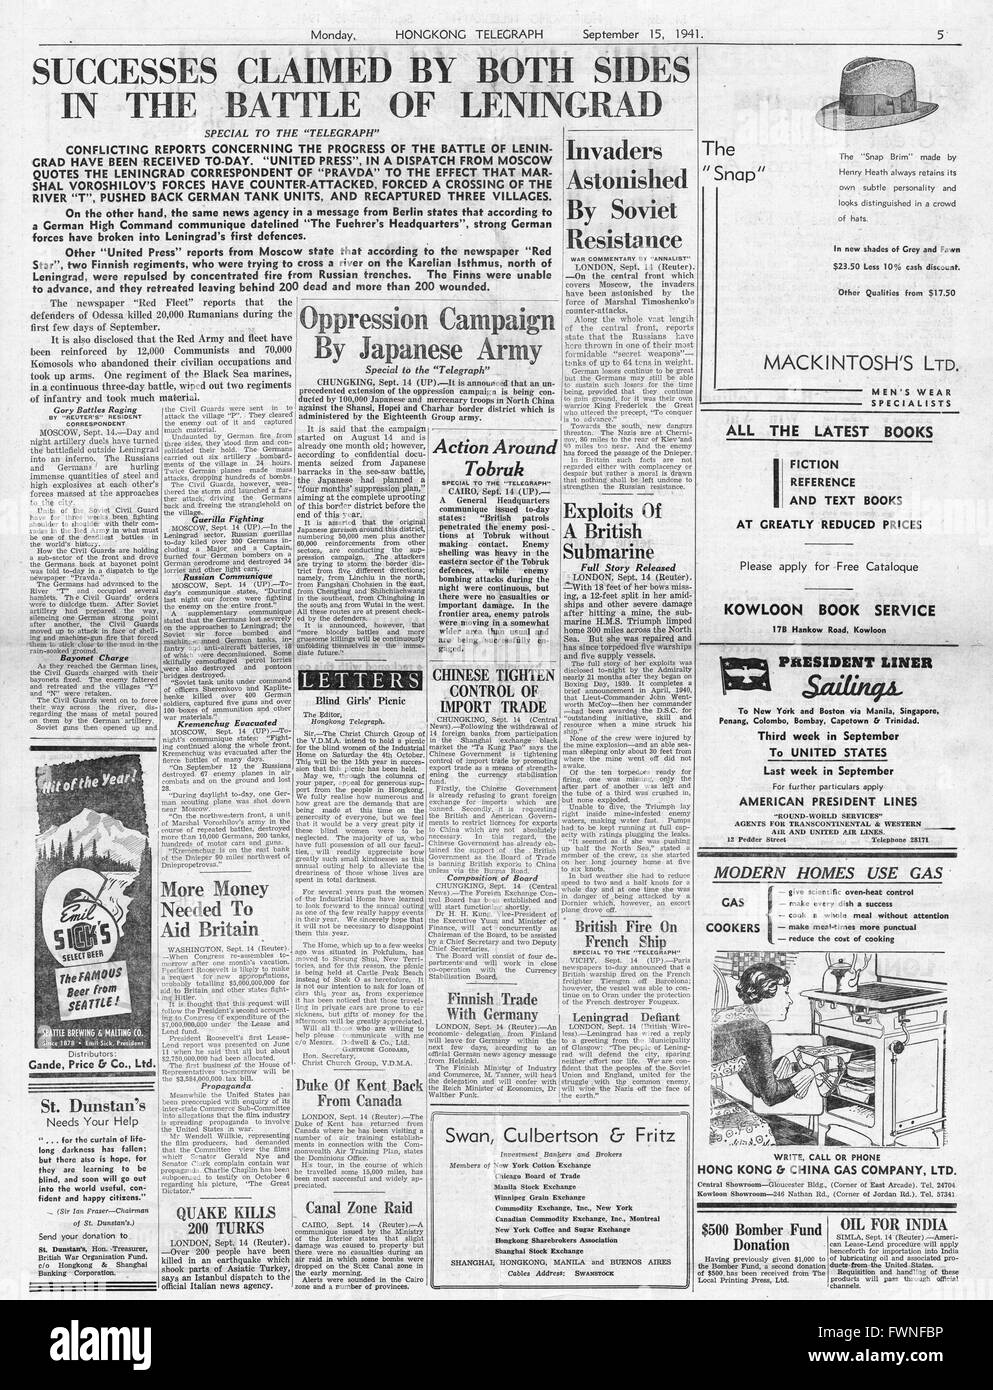 1941 page 5 Hong Kong Telegraph Battle for Leningrad Stock Photo